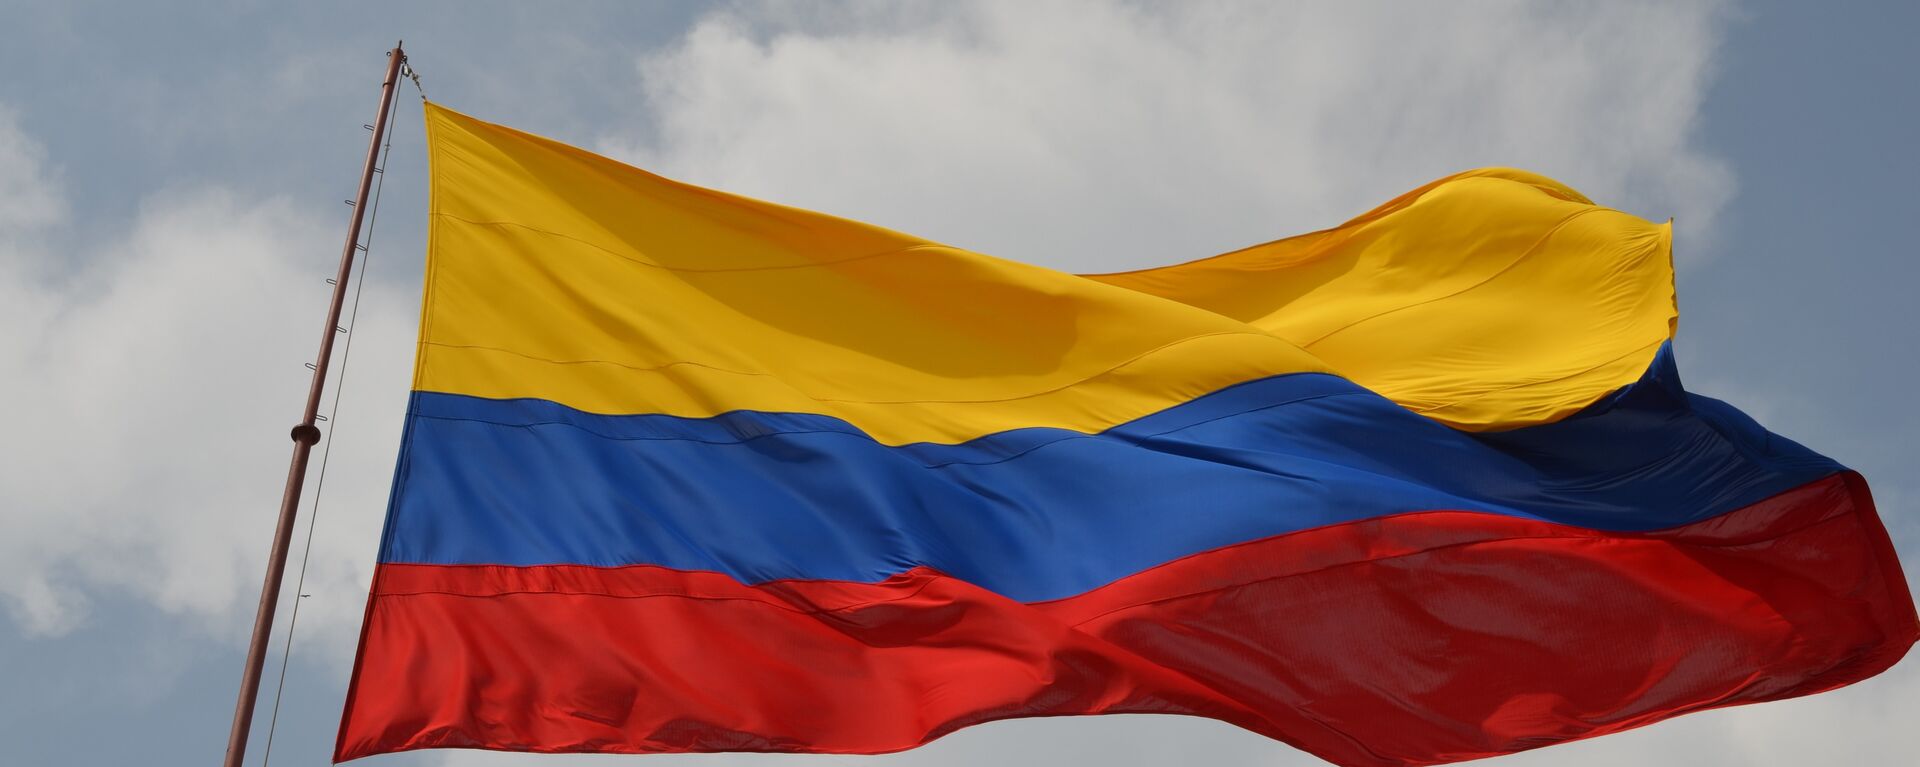 Bandera de Colombia - Sputnik Mundo, 1920, 01.10.2021